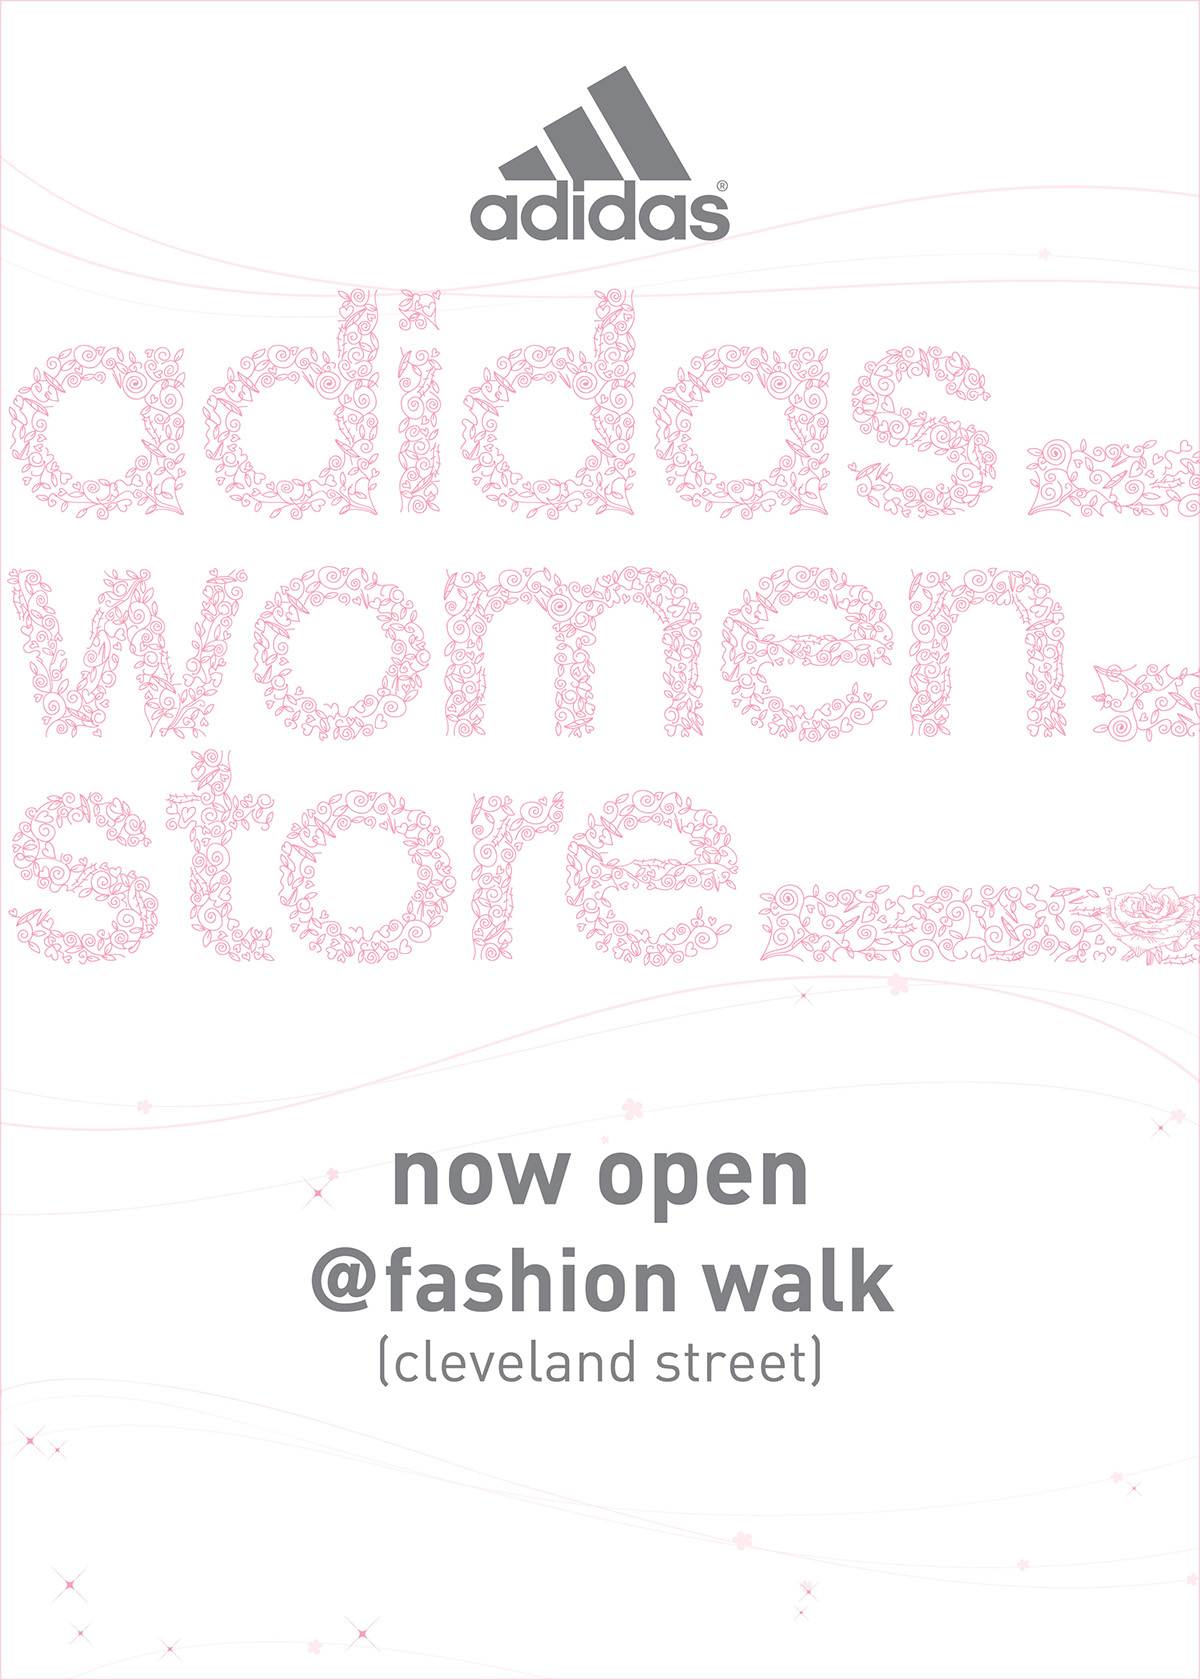 adidas women store poster